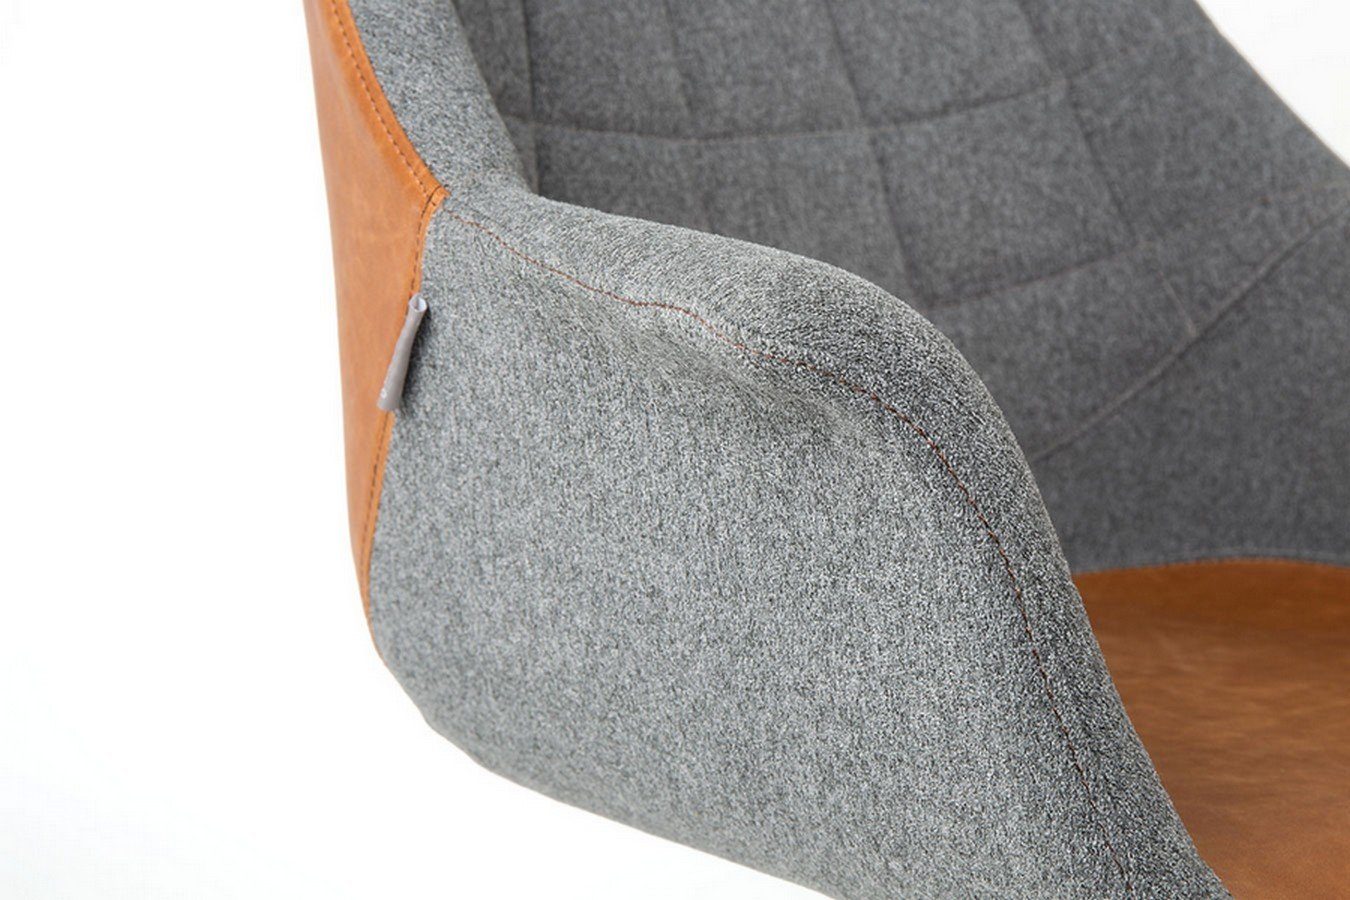 Zuiver Stuhl Bürostuhl Doulton grau Stoff